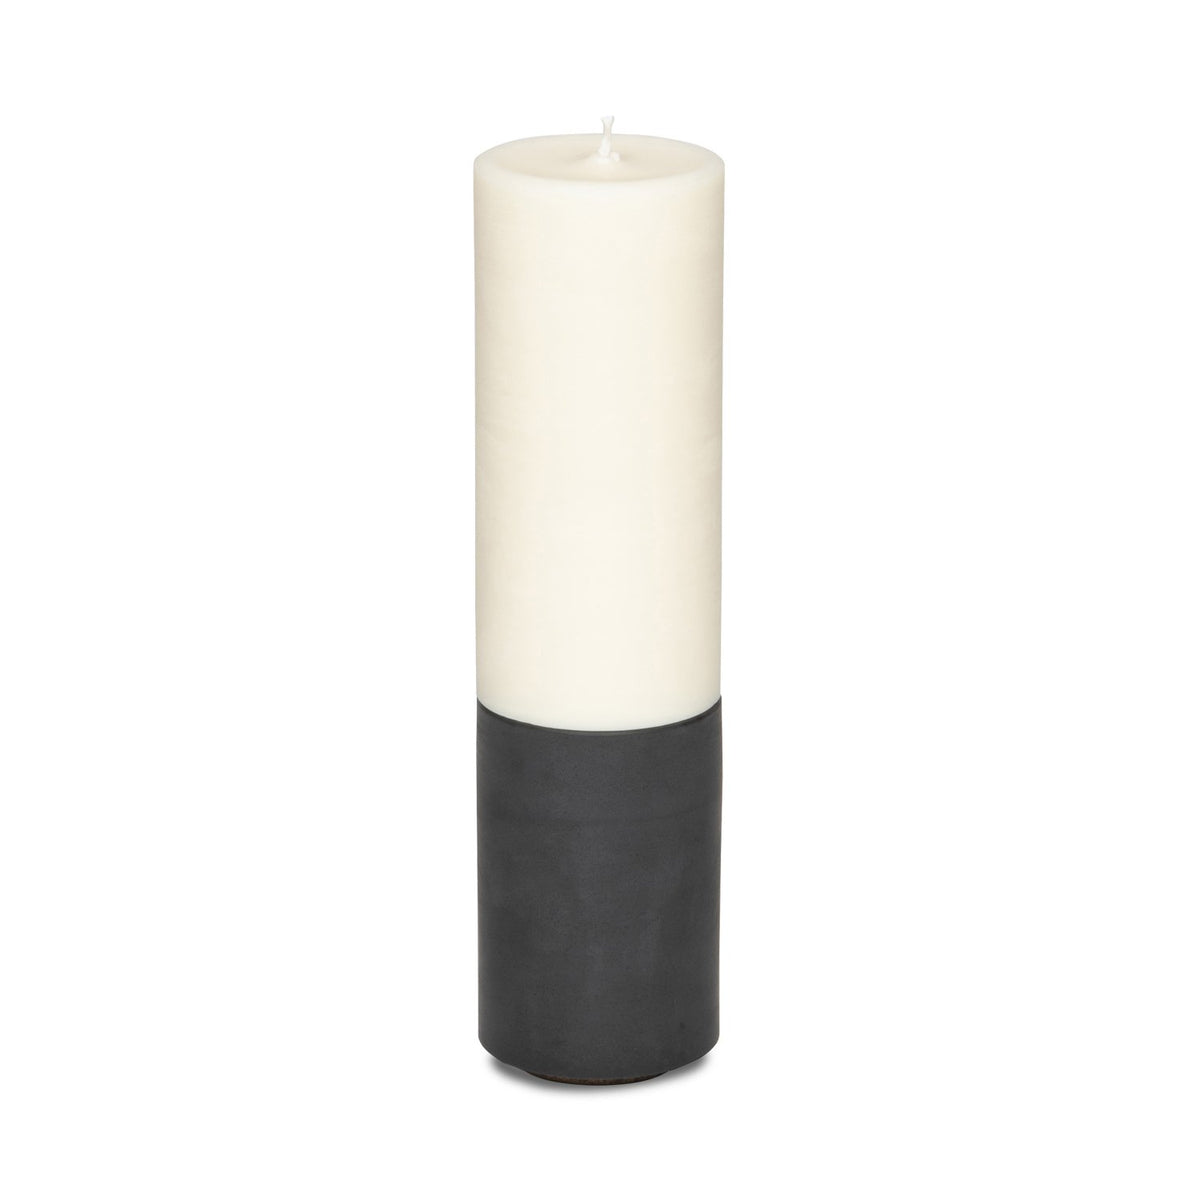 Slim Holder & Candle Set Concrete & Wax